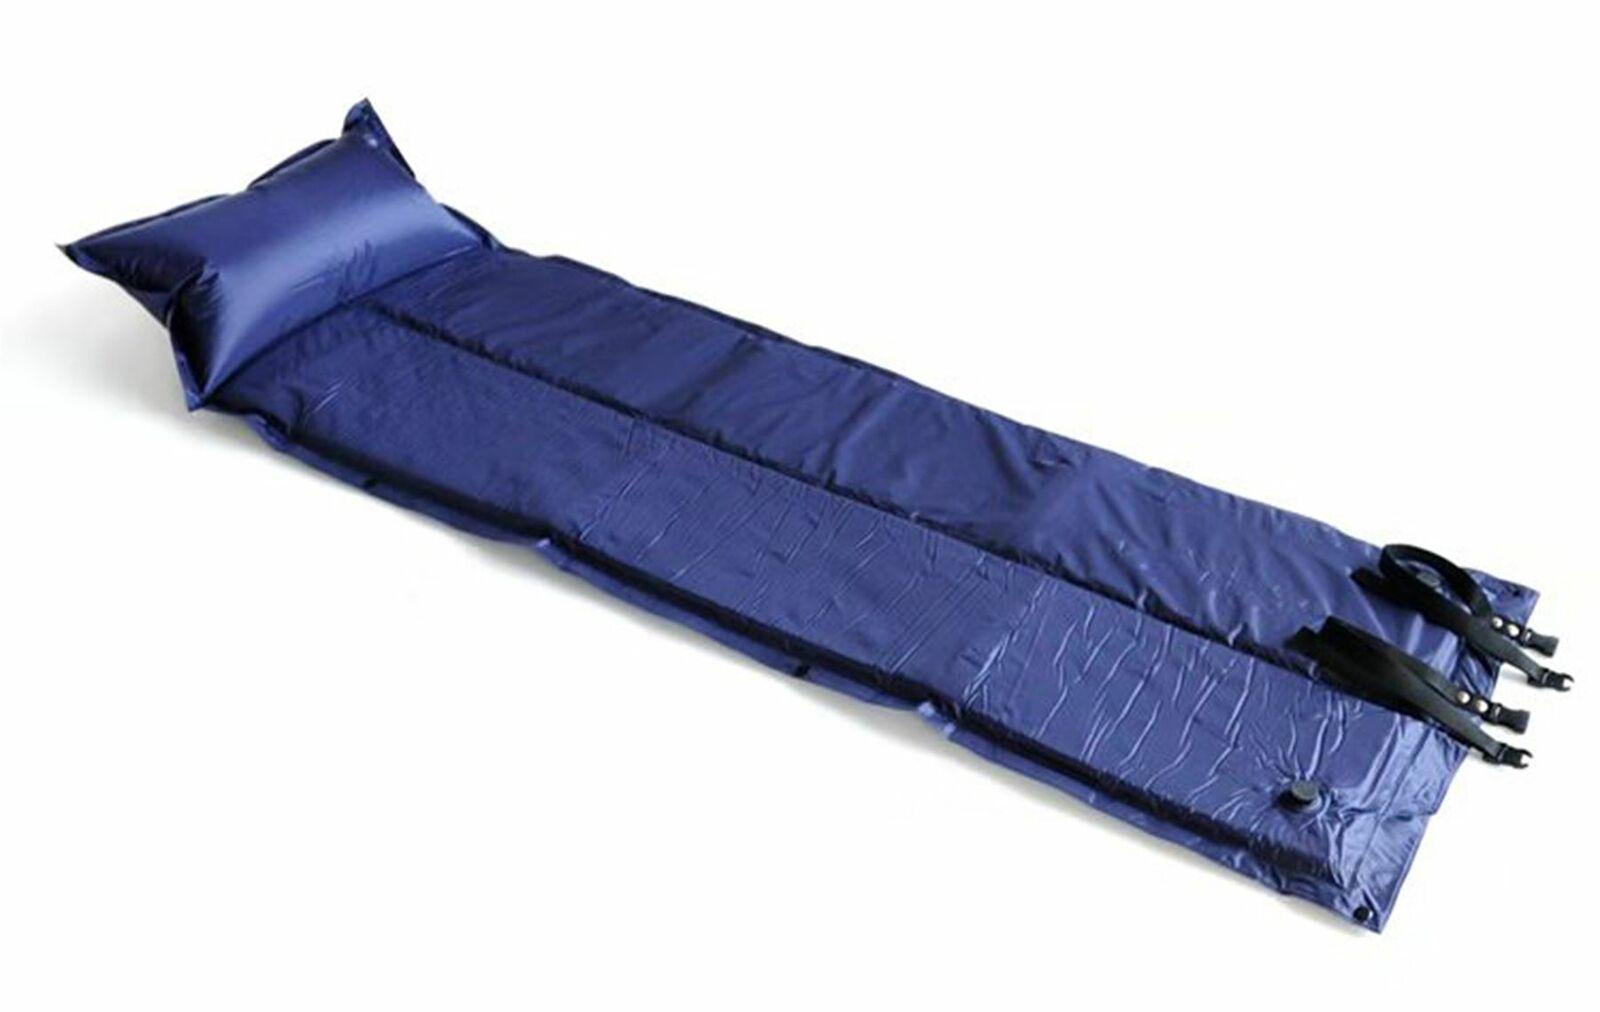 napmat inflatable sleeping mattress